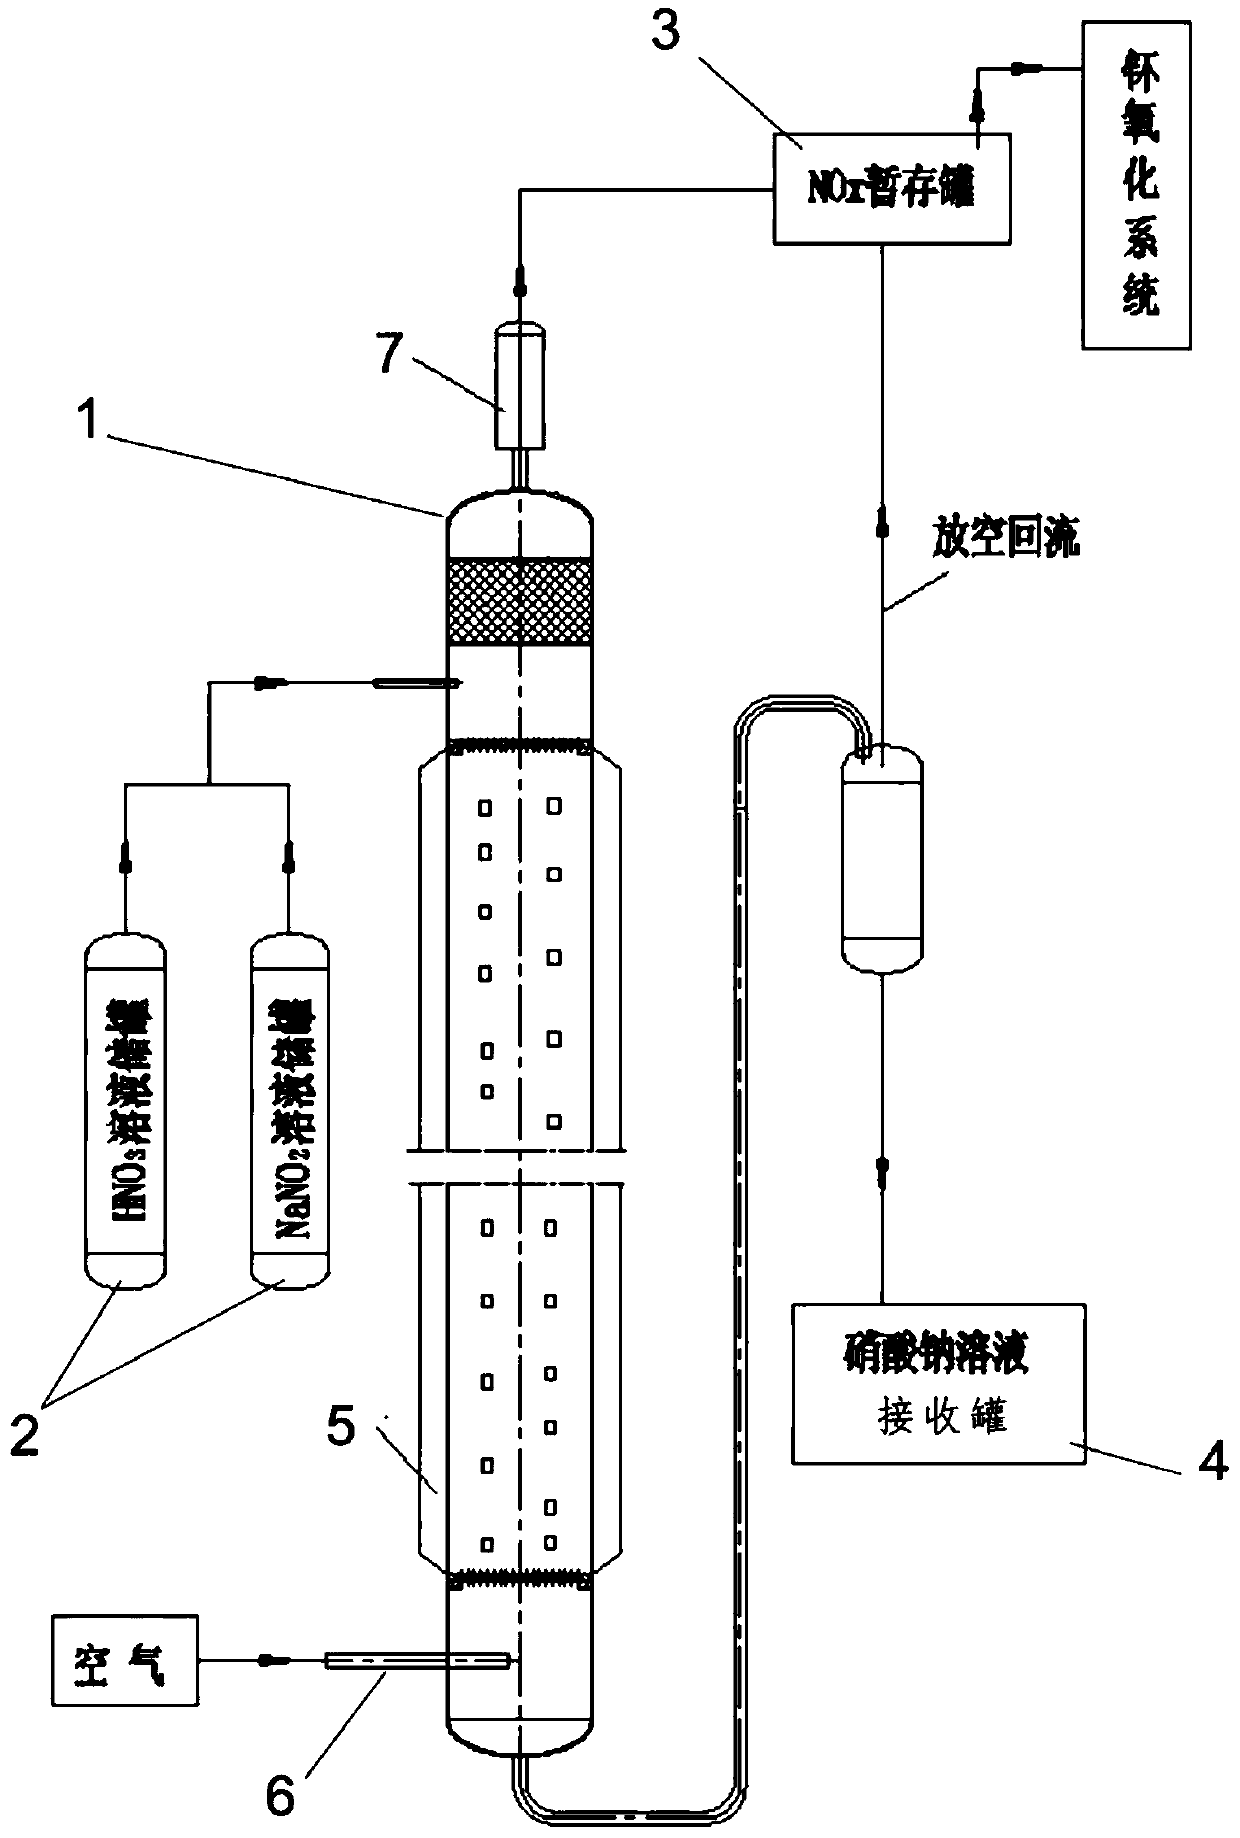 Preparation method and apparatus of nitrogen oxides